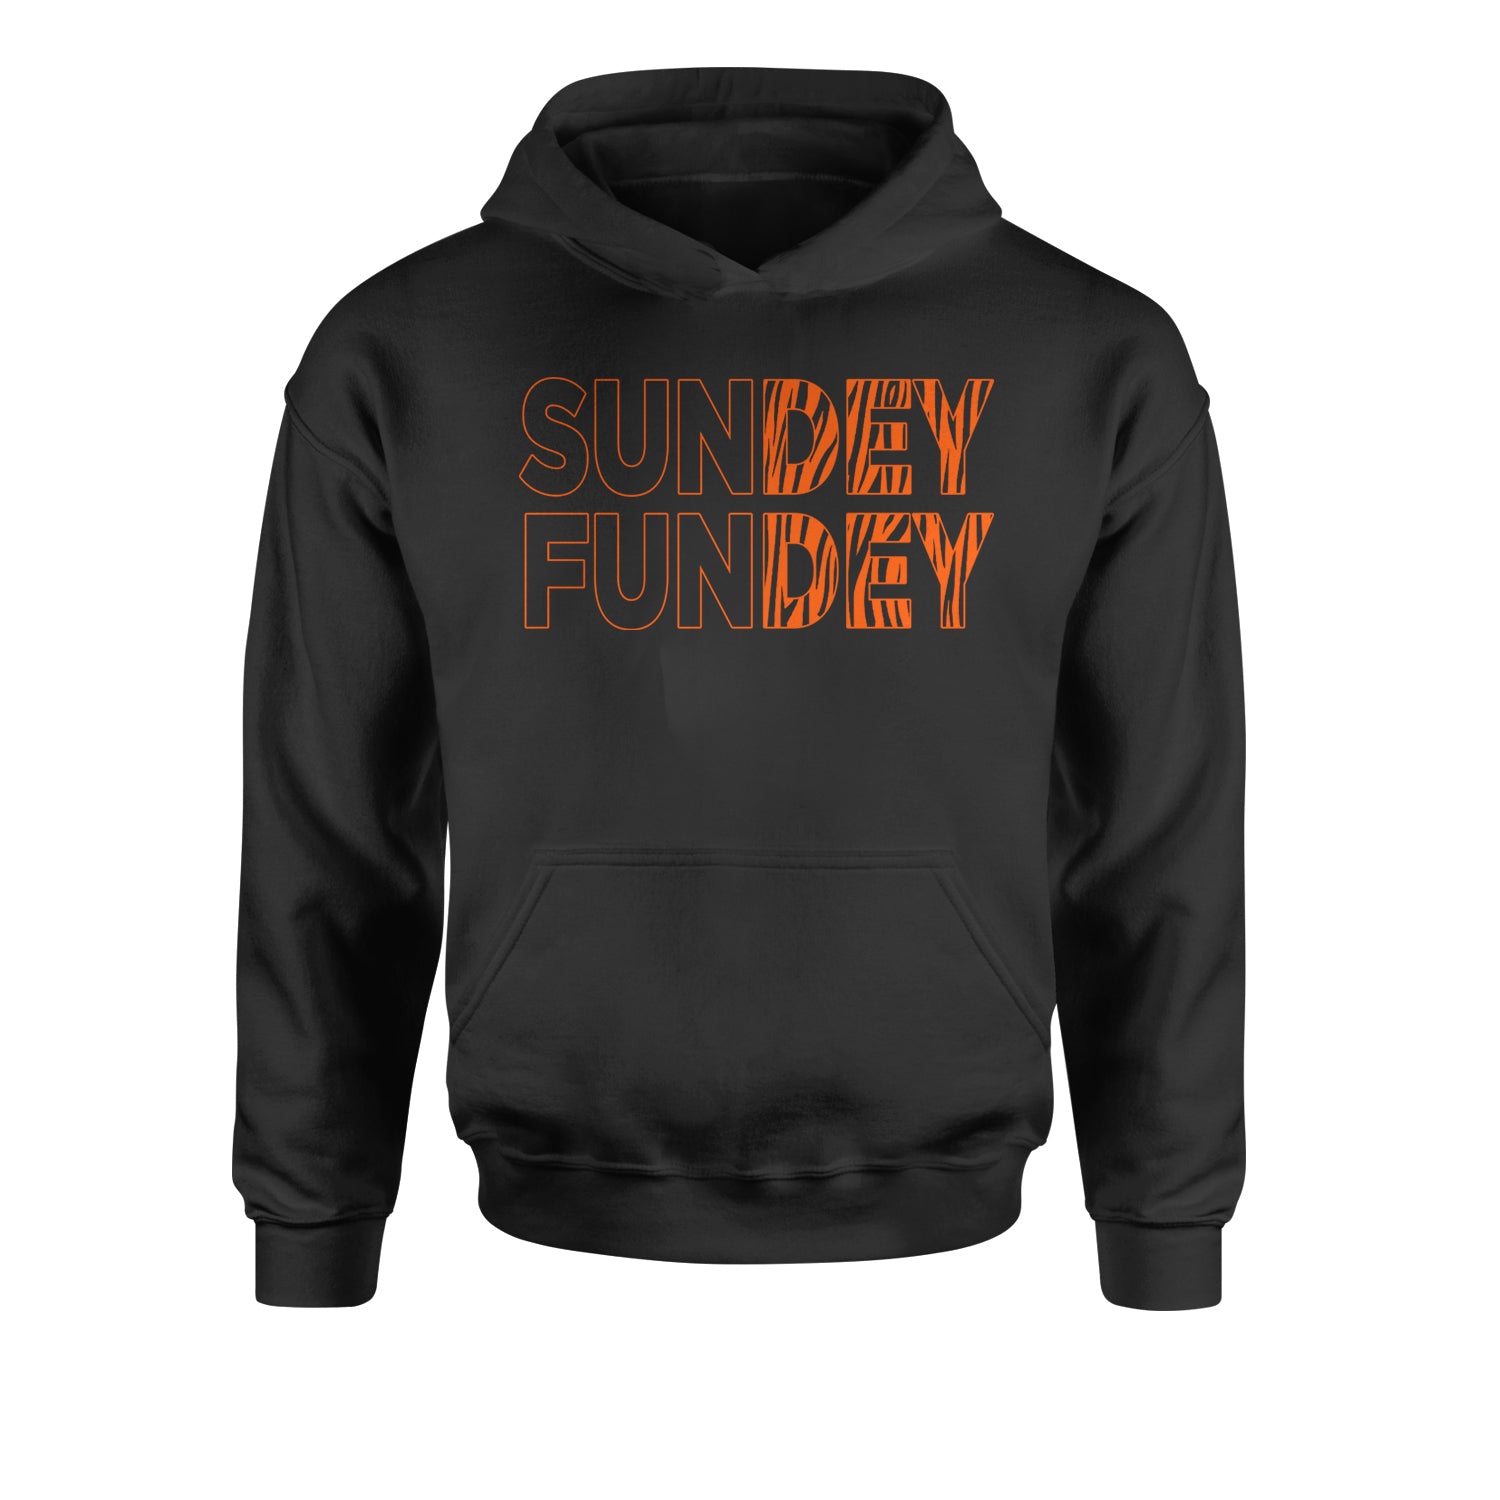 SunDEY FunDEY Sunday Funday Youth-Sized Hoodie ball, burrow, dey, foot, football, joe, ohio, sports, who by Expression Tees